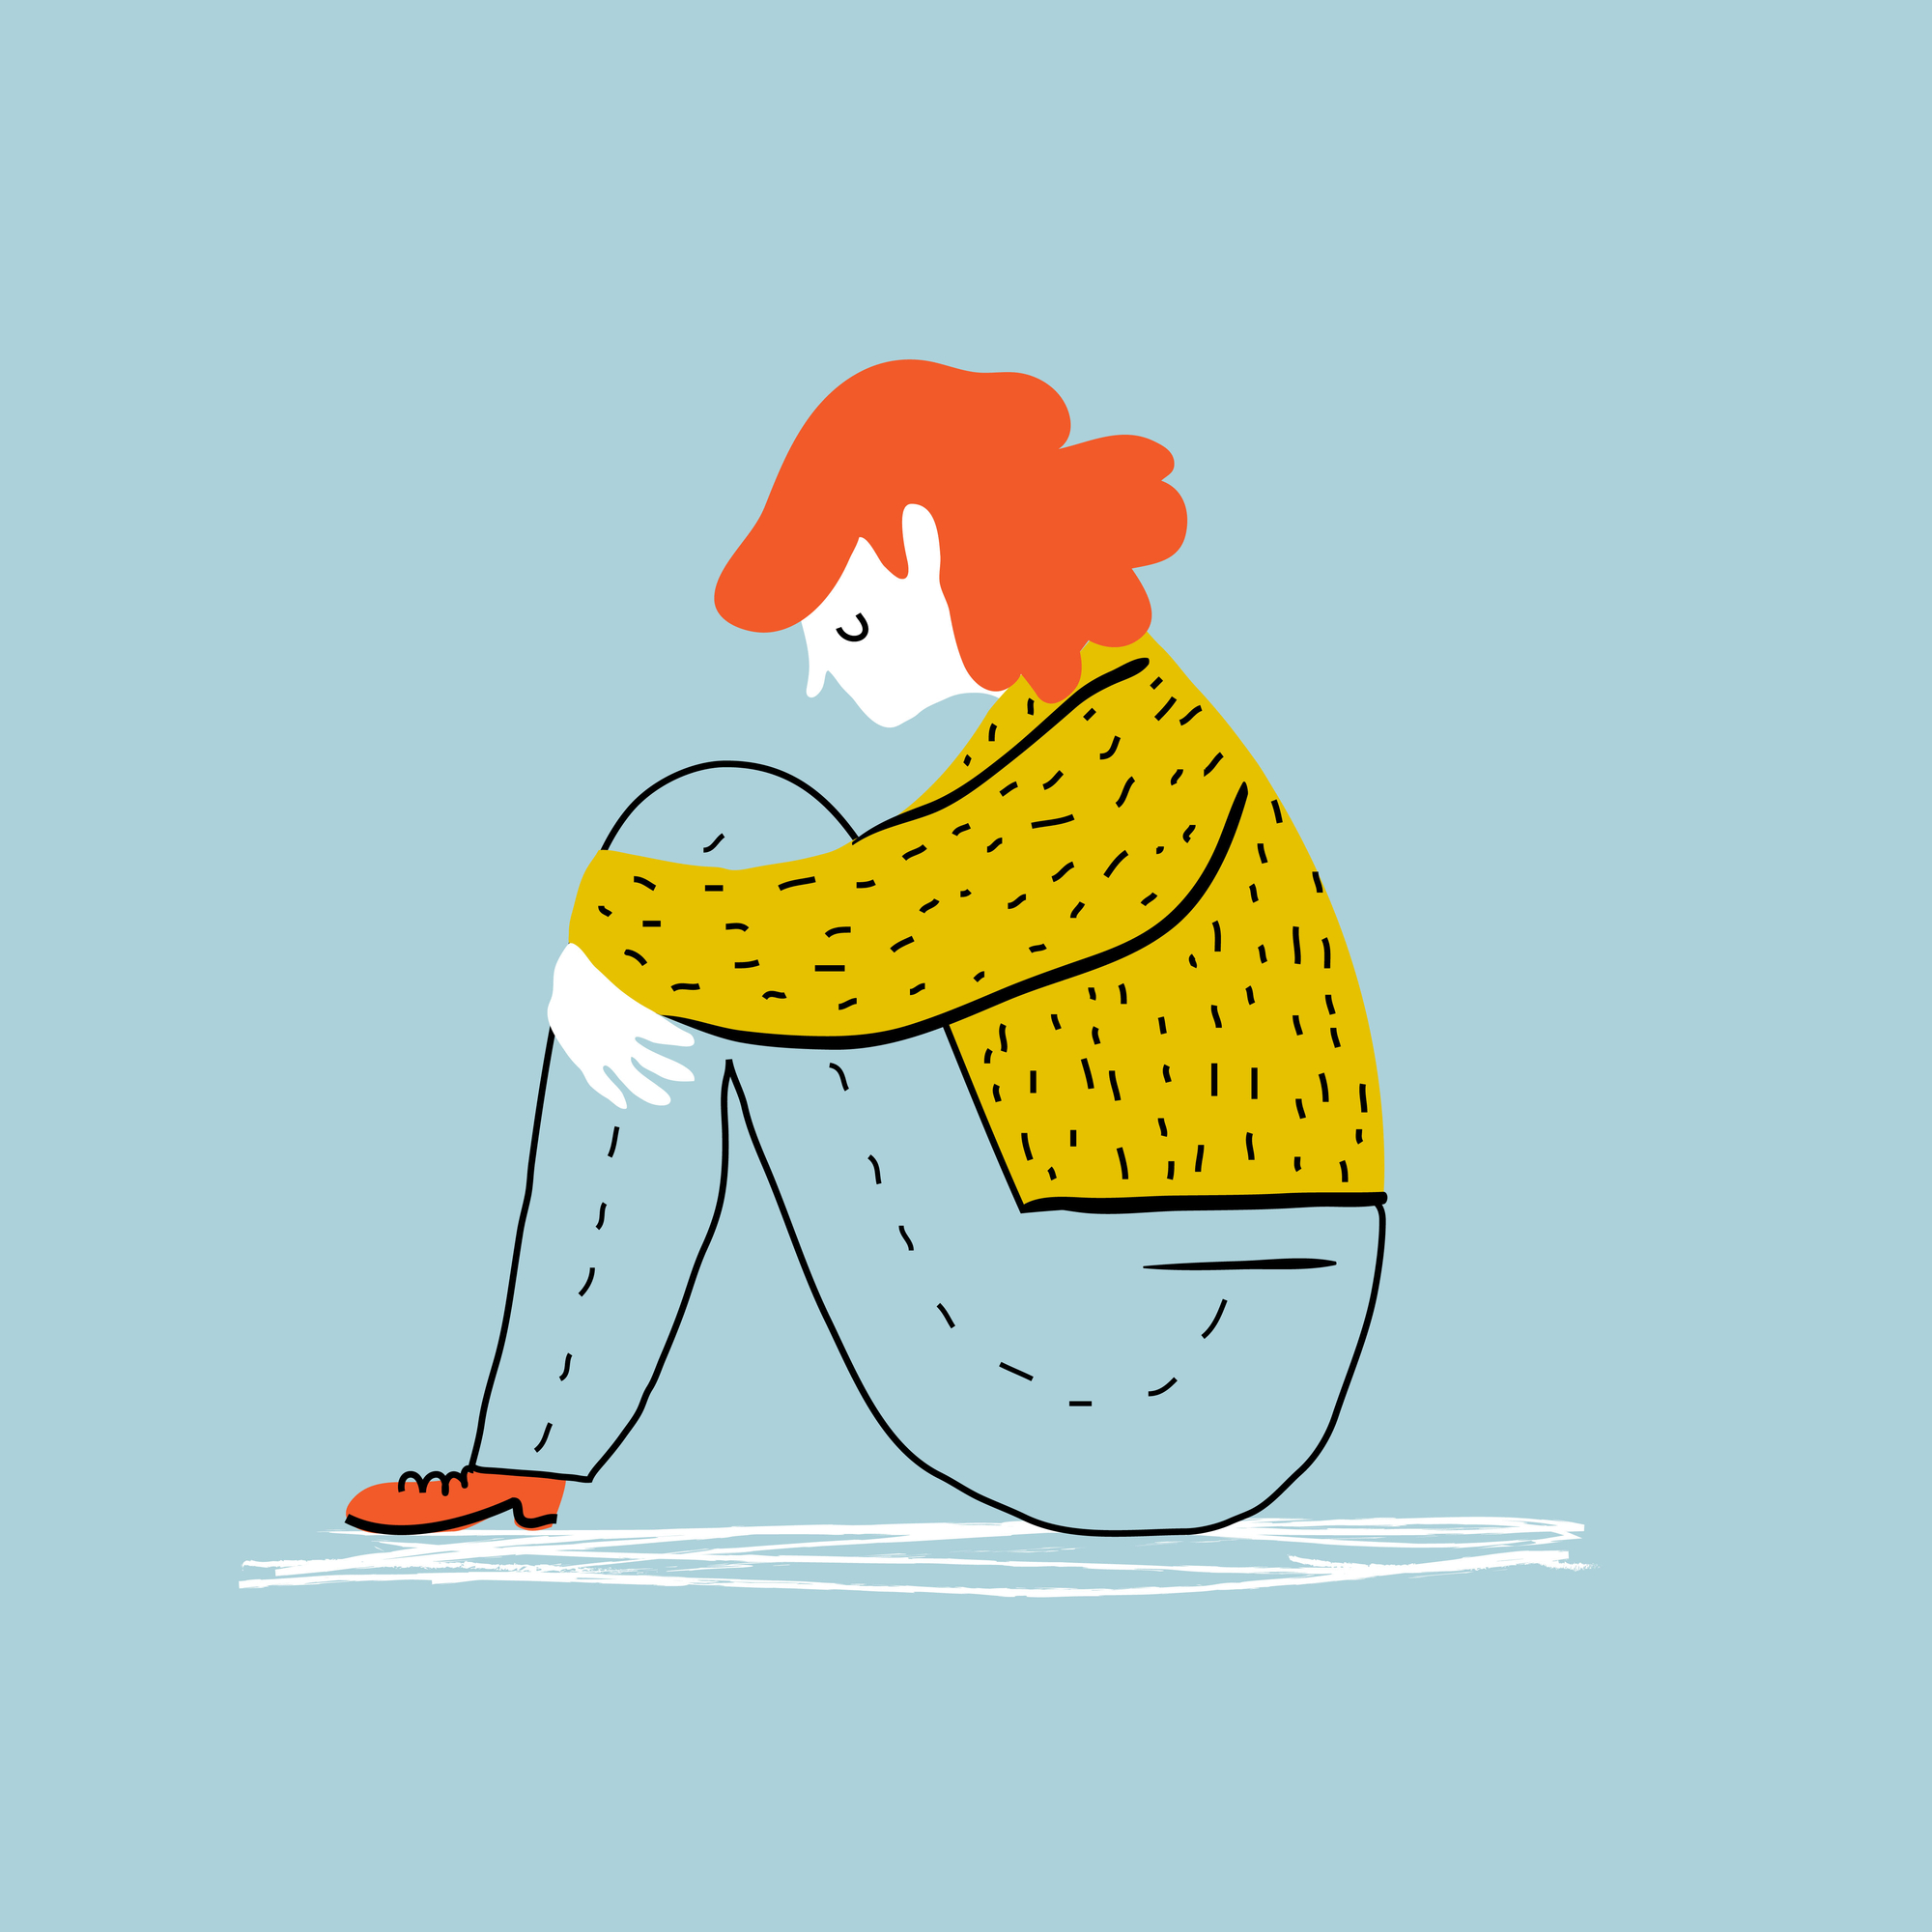 Sad and depressed girl  sitting on the floor. Creative vector illustration.